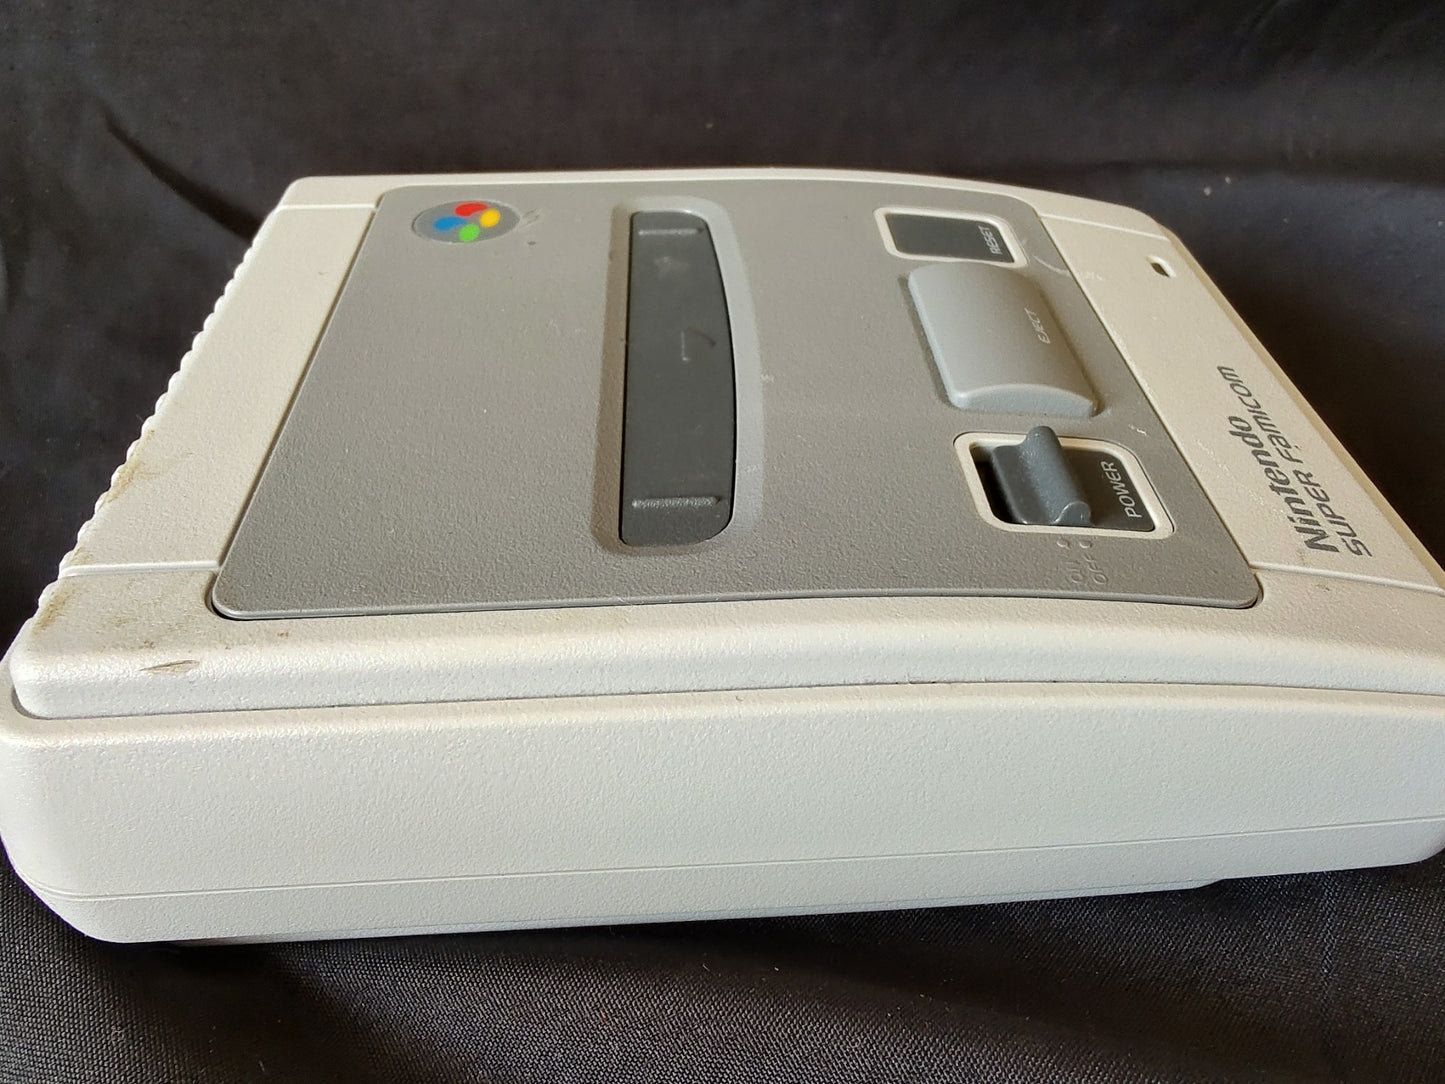 Nintendo Super Famicom Classic Mini Console, Console only, working-g0315-